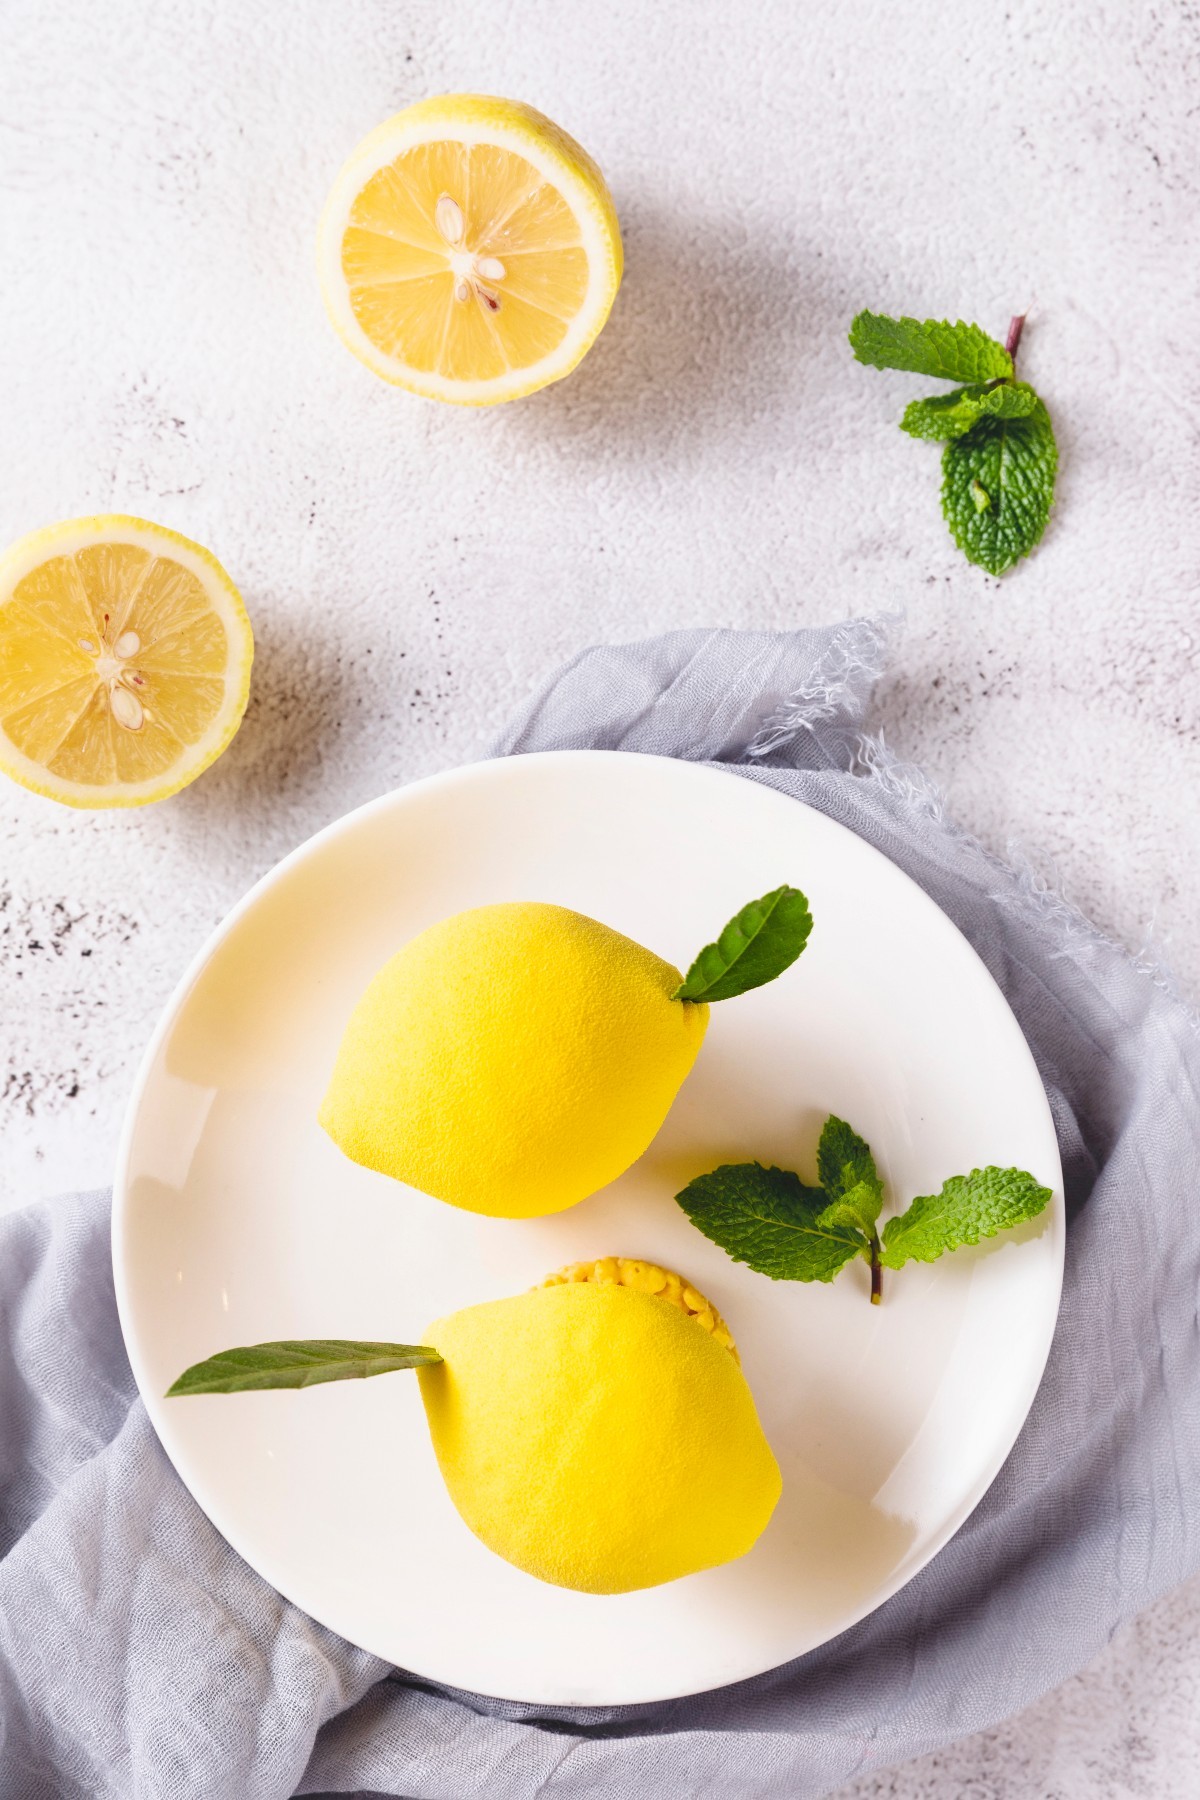 【夏日小甜品】超简单！自制一颗柠檬小蛋糕！_哔哩哔哩 (゜-゜)つロ 干杯~-bilibili